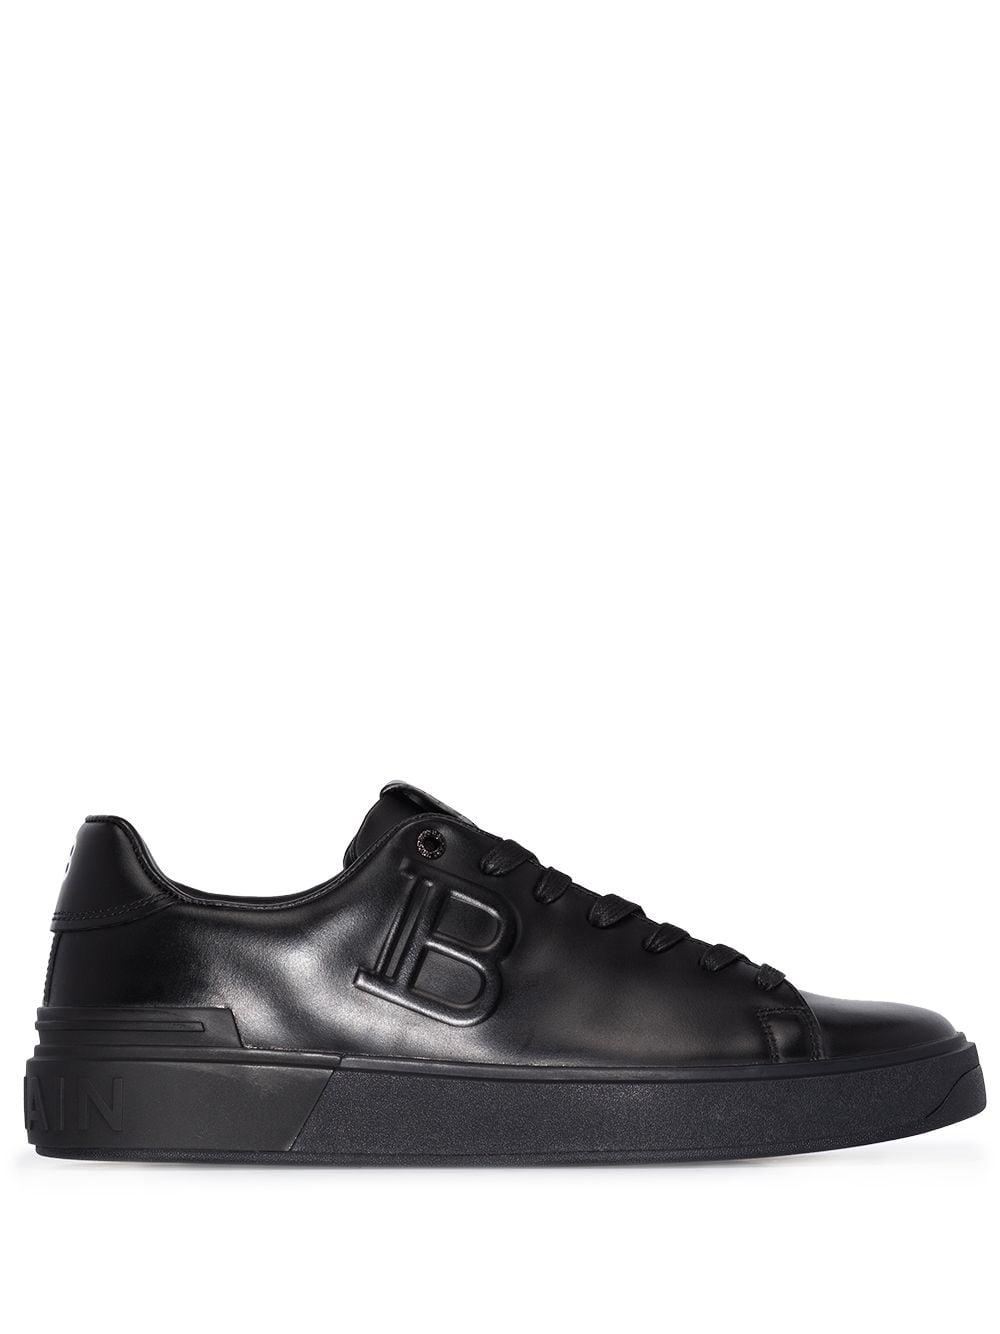 Balmain Leather B-court Embossed Low-top Sneakers in Black for Men - Lyst